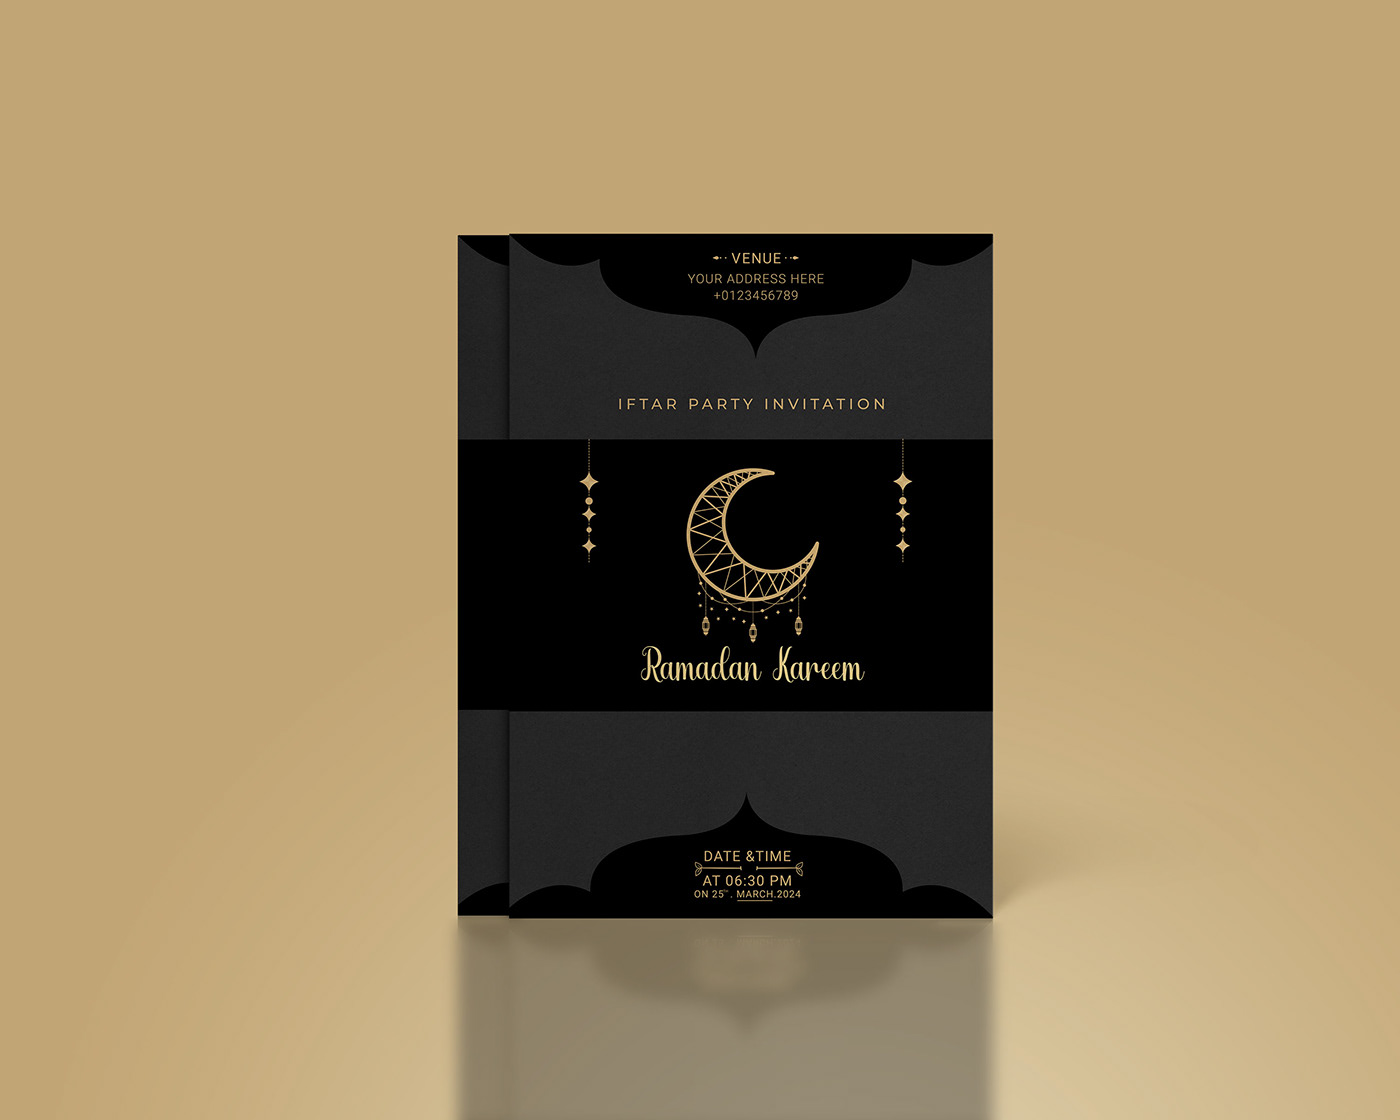 Ramadan party invitation with black background, decorative crescent moon, text "Ramadan Kareem"